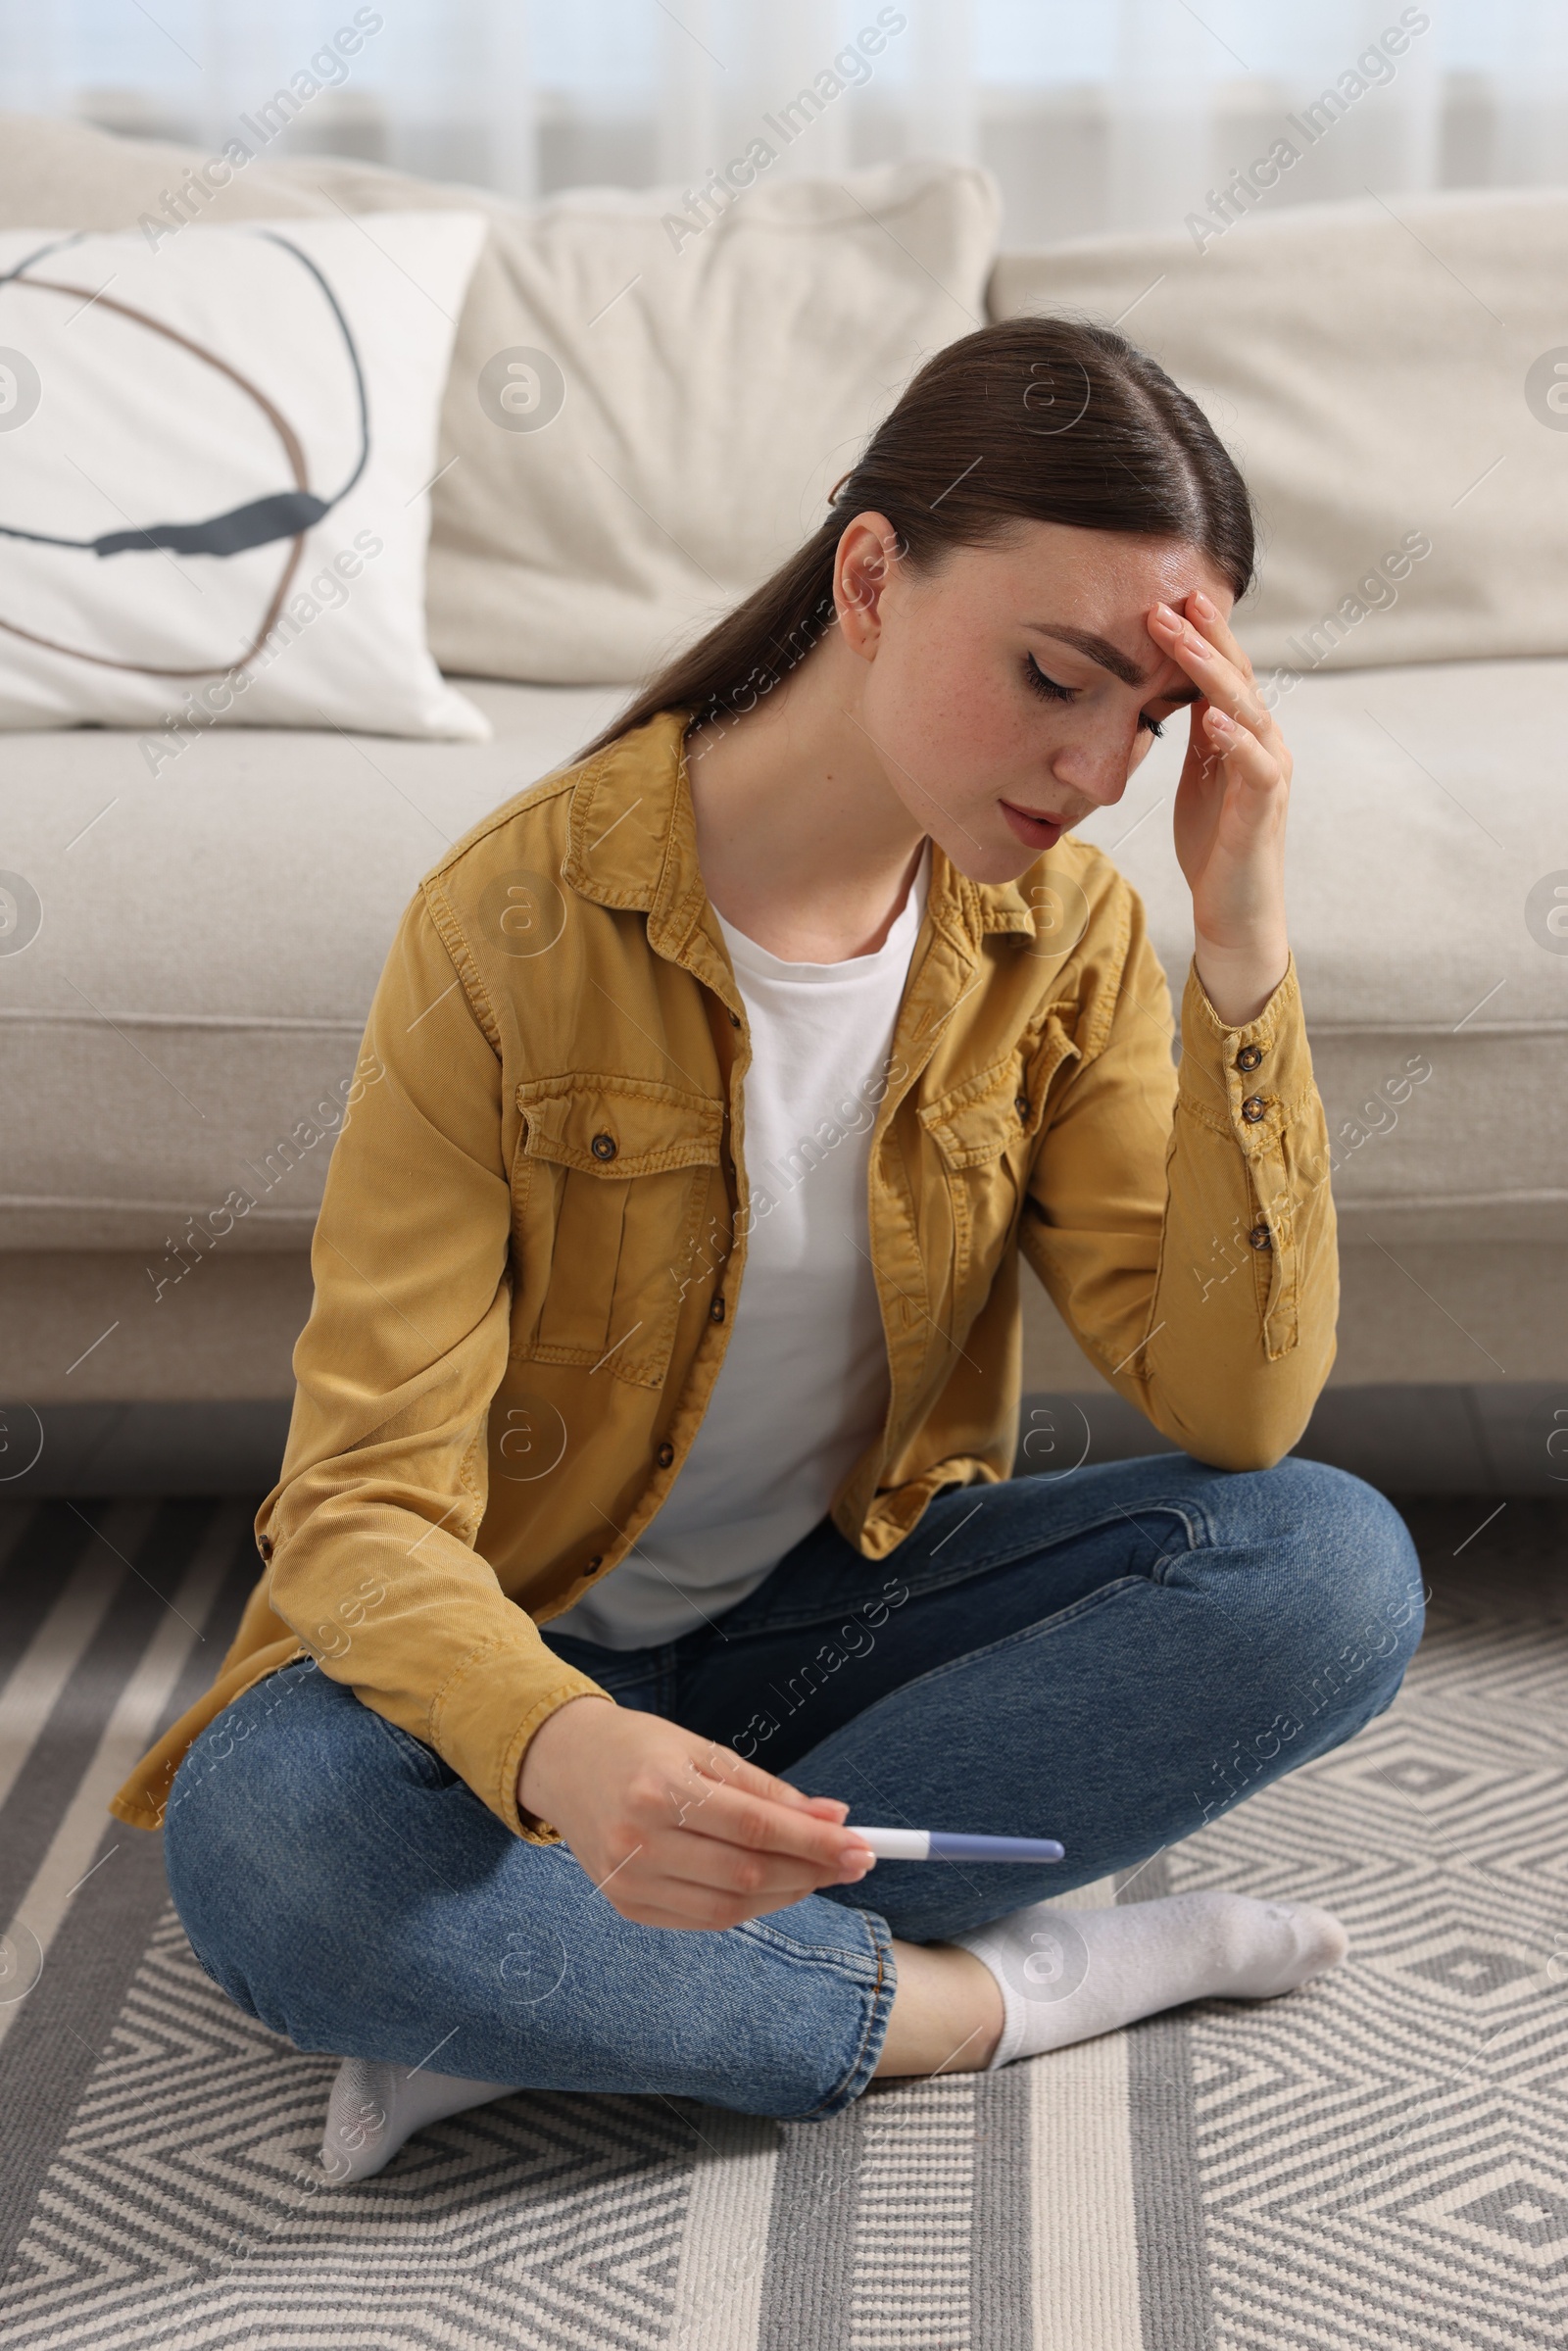 Photo of Sad woman holding pregnancy test on floor indoors